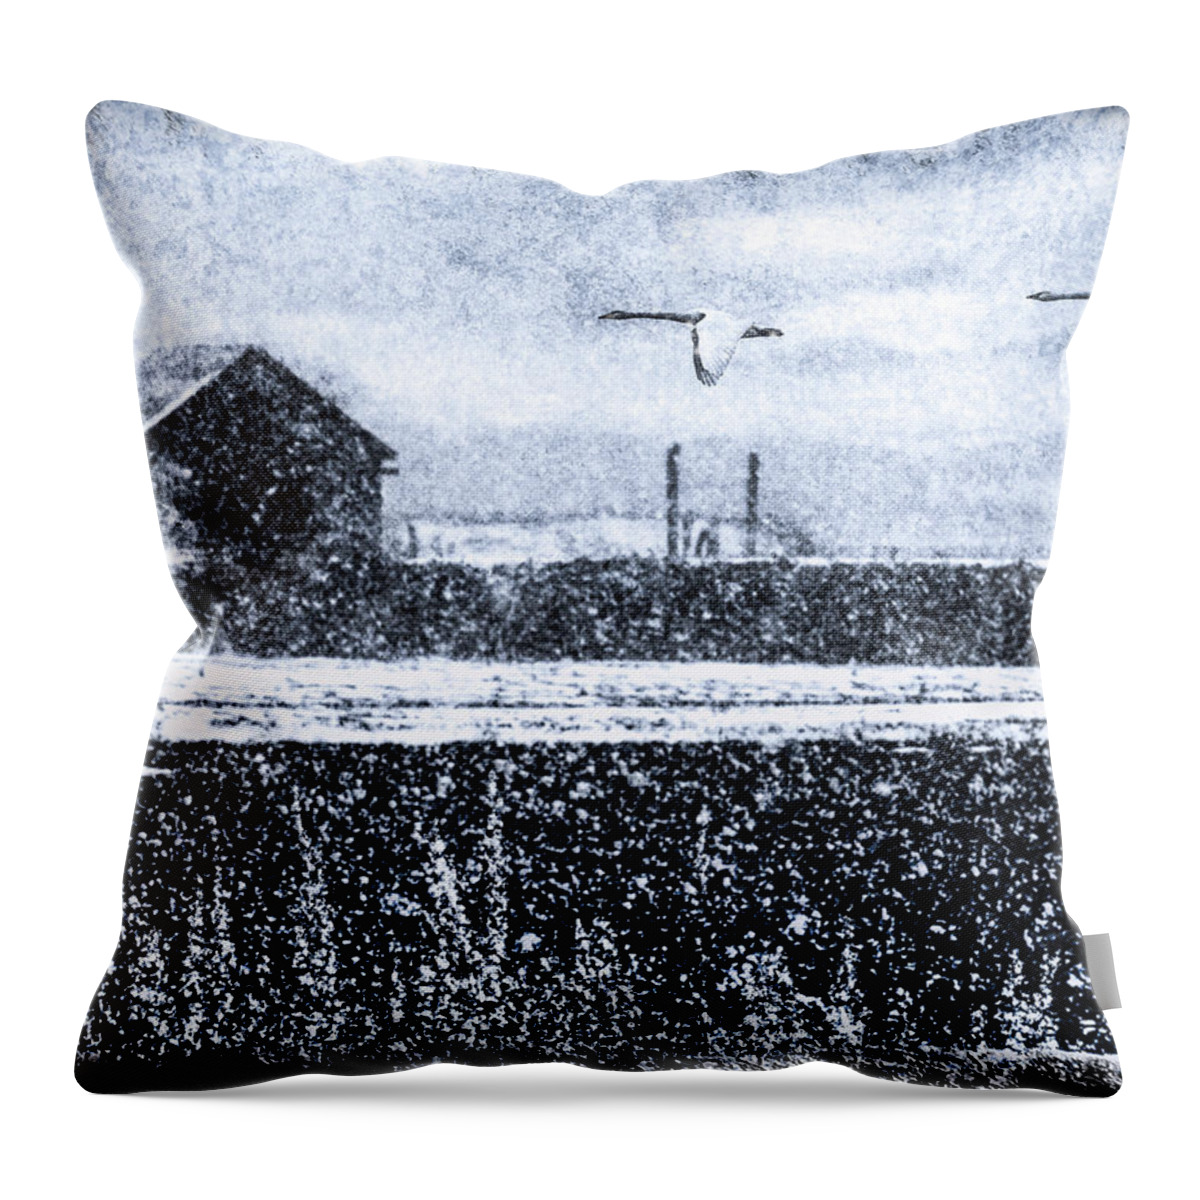 Winter Throw Pillow featuring the digital art Winter Swans by Ken Taylor